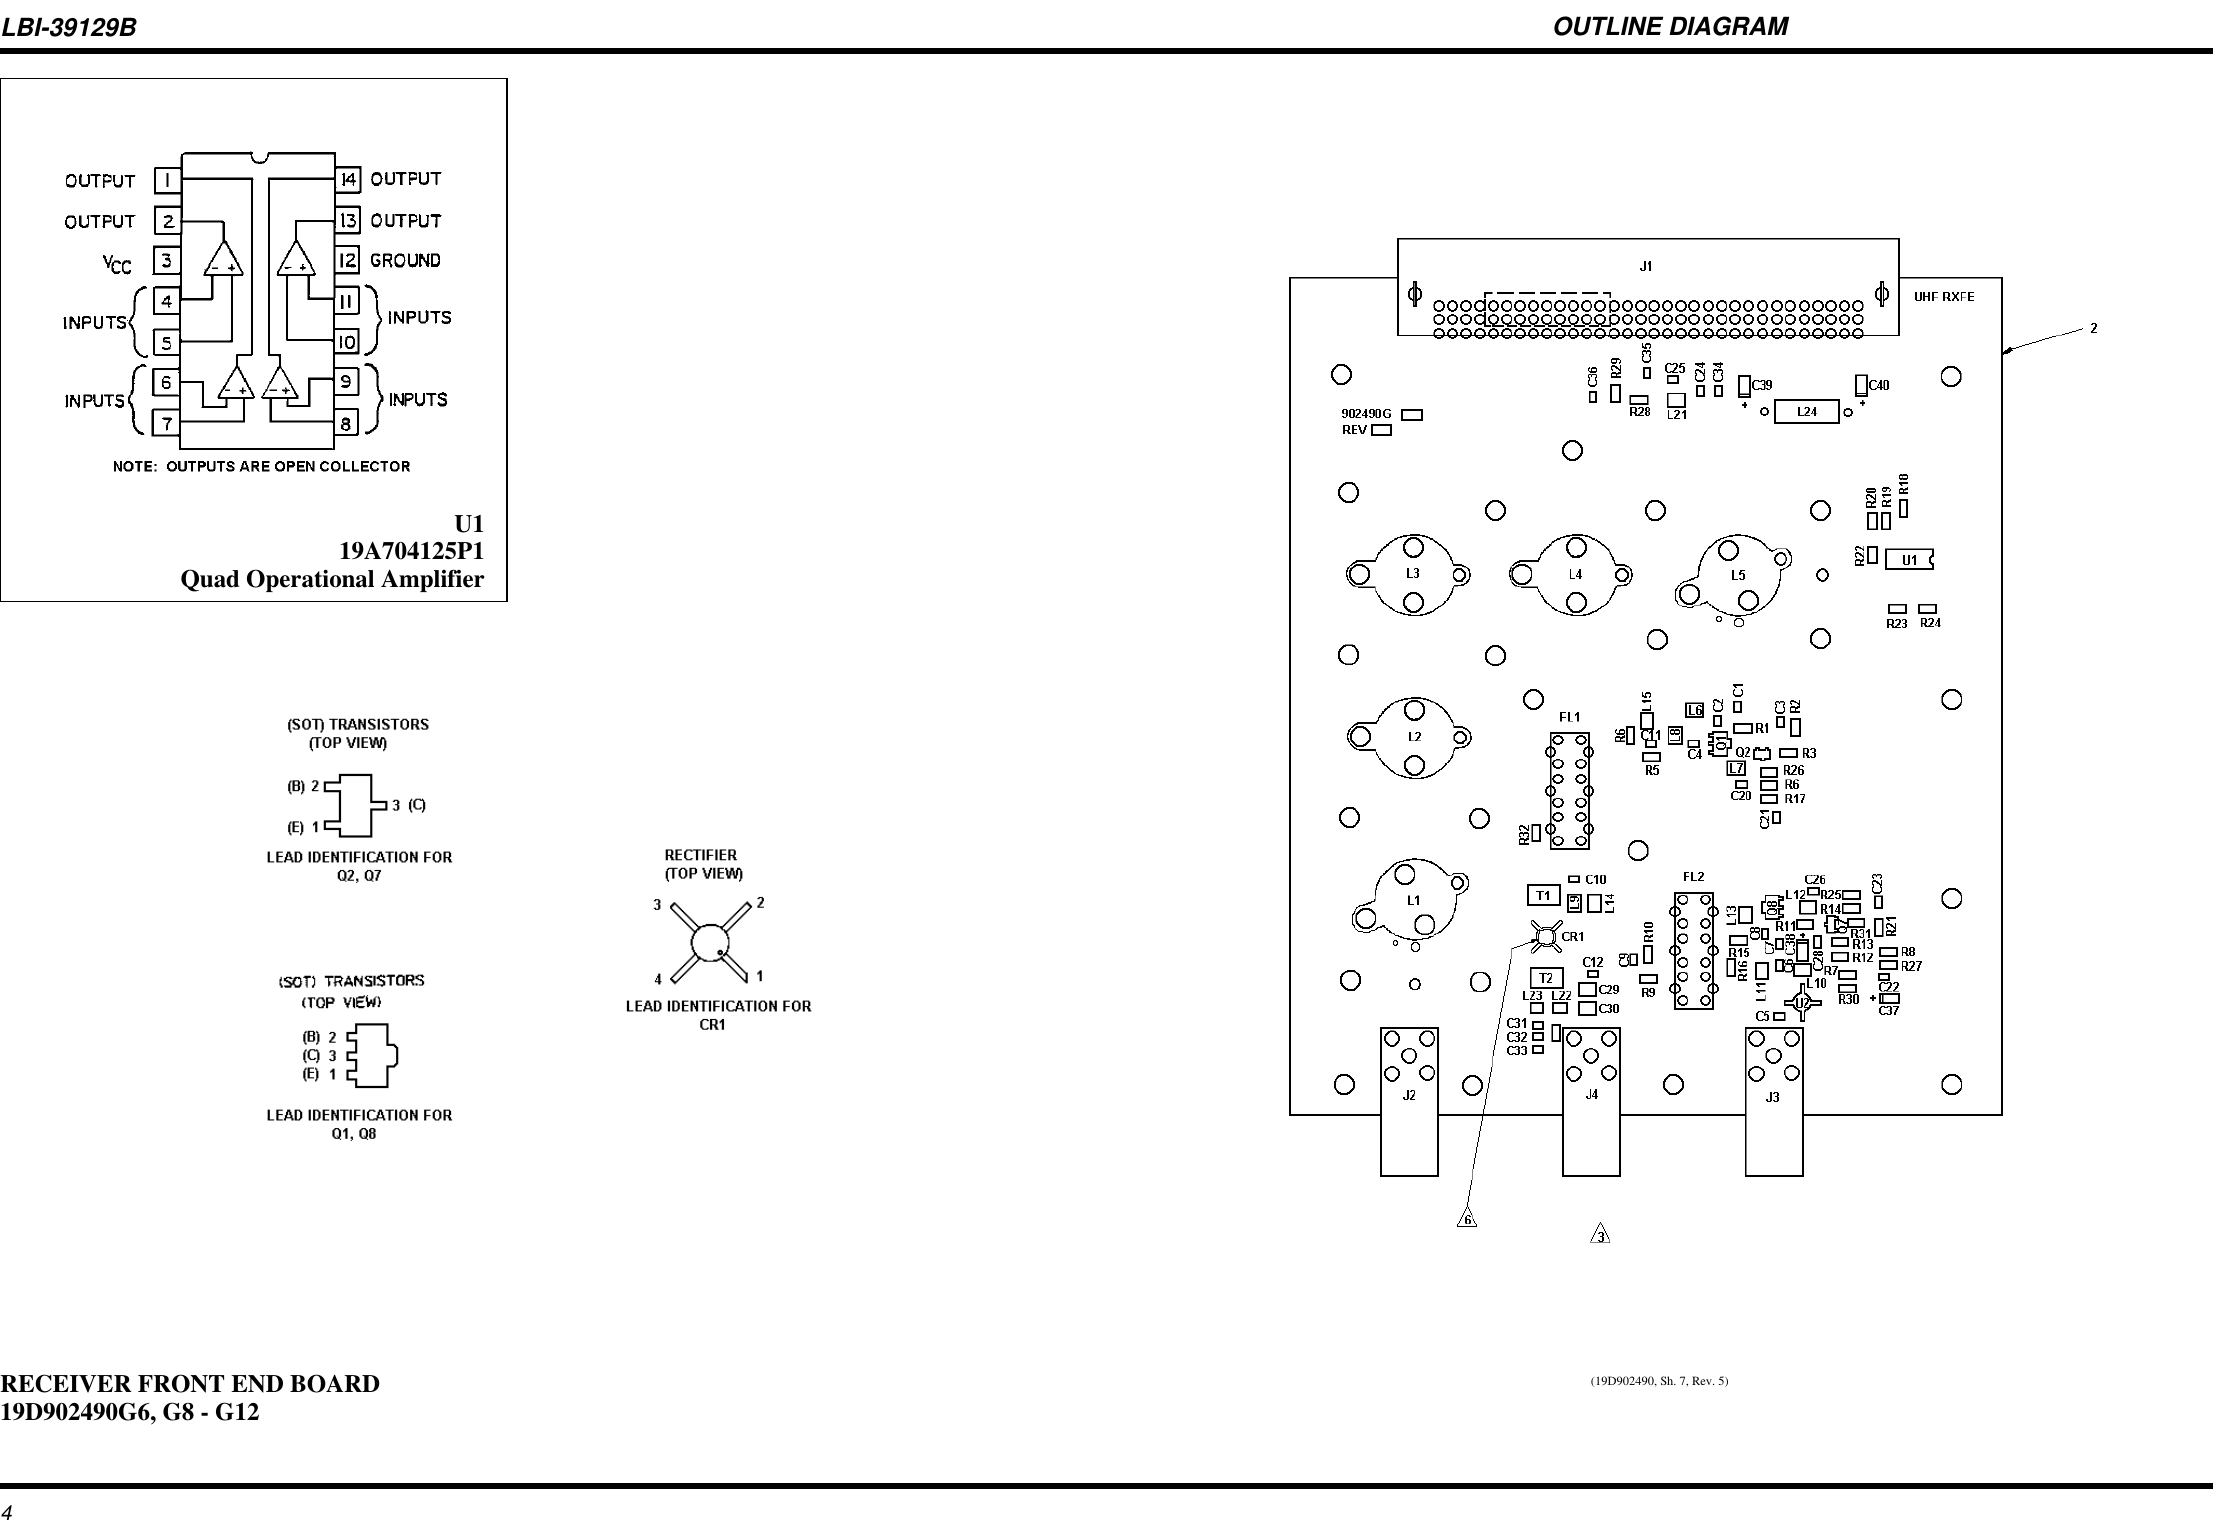 OUTLINE DIAGRAMU119A704125P1Quad Operational Amplifier(19D902490, Sh. 7, Rev. 5)RECEIVER FRONT END BOARD19D902490G6, G8 - G12LBI-39129B4